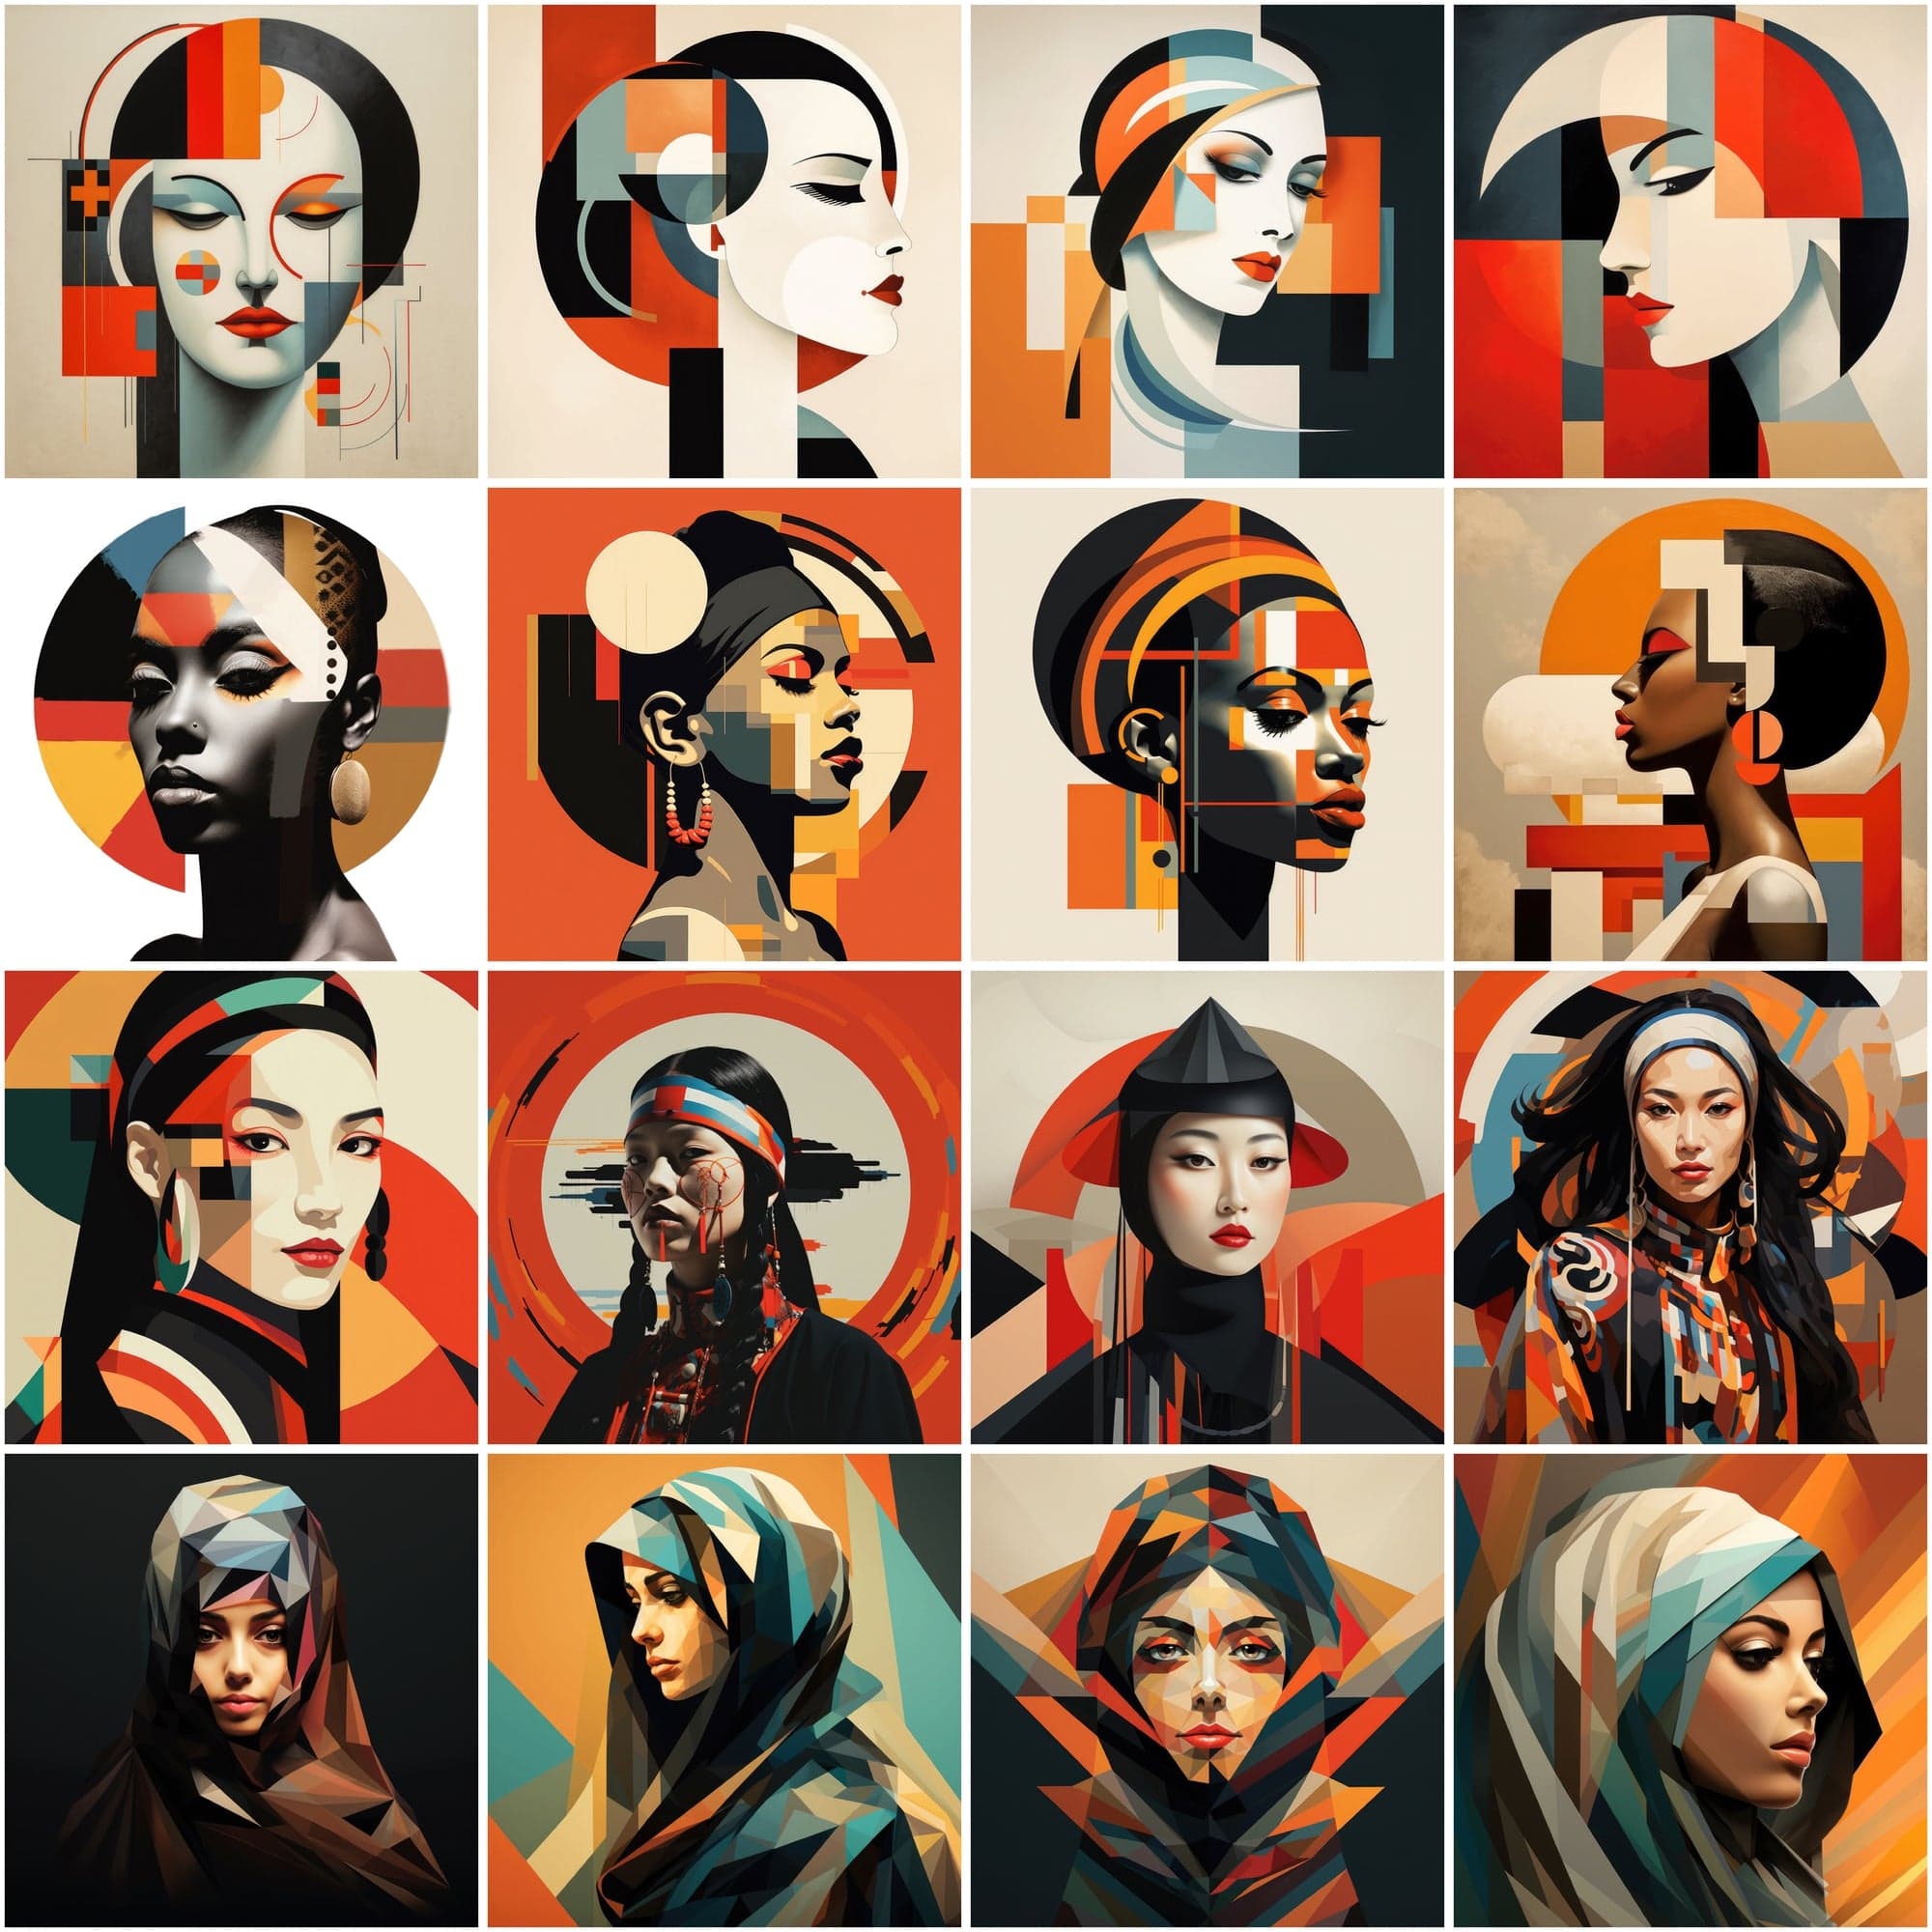 Abstract Geometric Women Portraits: Bauhaus-Style, Cubist, & Graphic Illustrations – Commercial License Digital Download Sumobundle